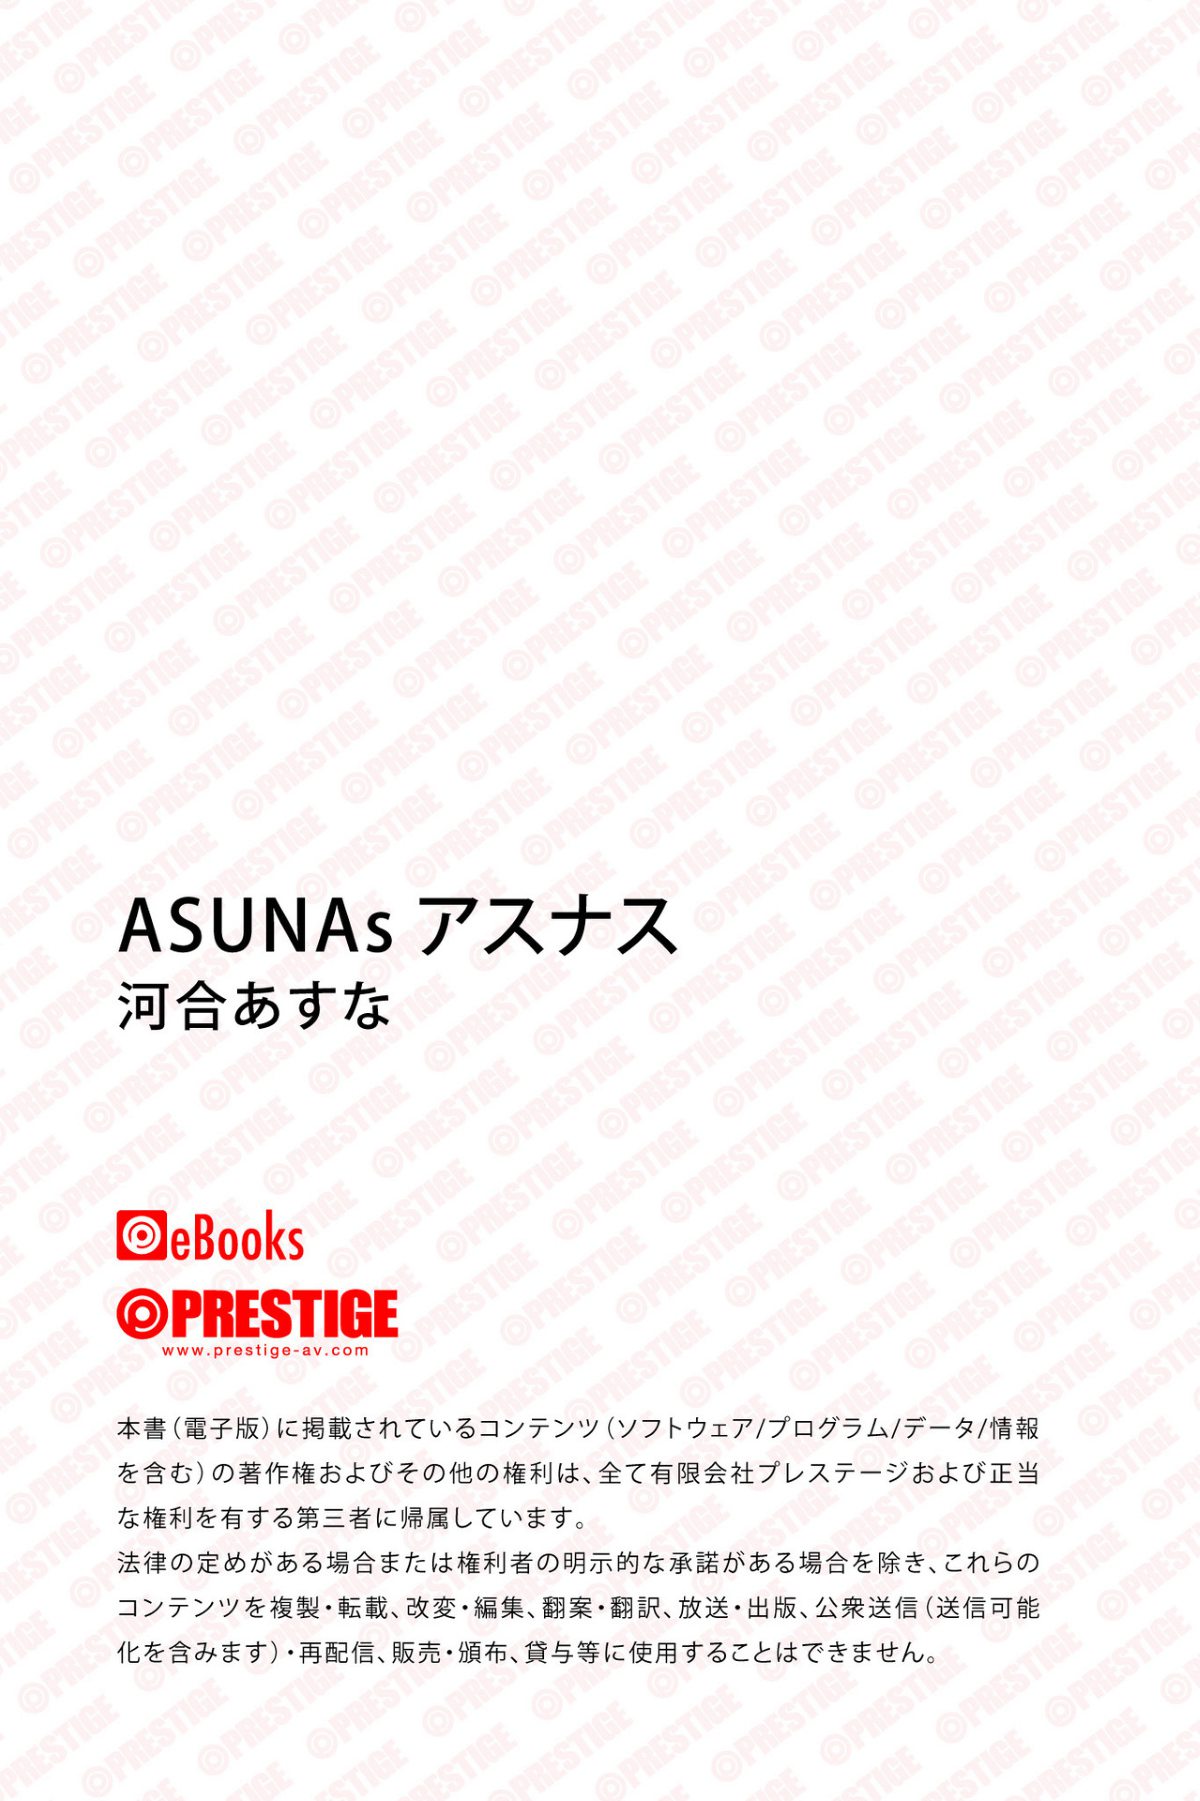 Photobook Asuna Kawai 河合あすな ASUNAs アスナス Vol 1 2019 08 15 0081 3642287227.jpg